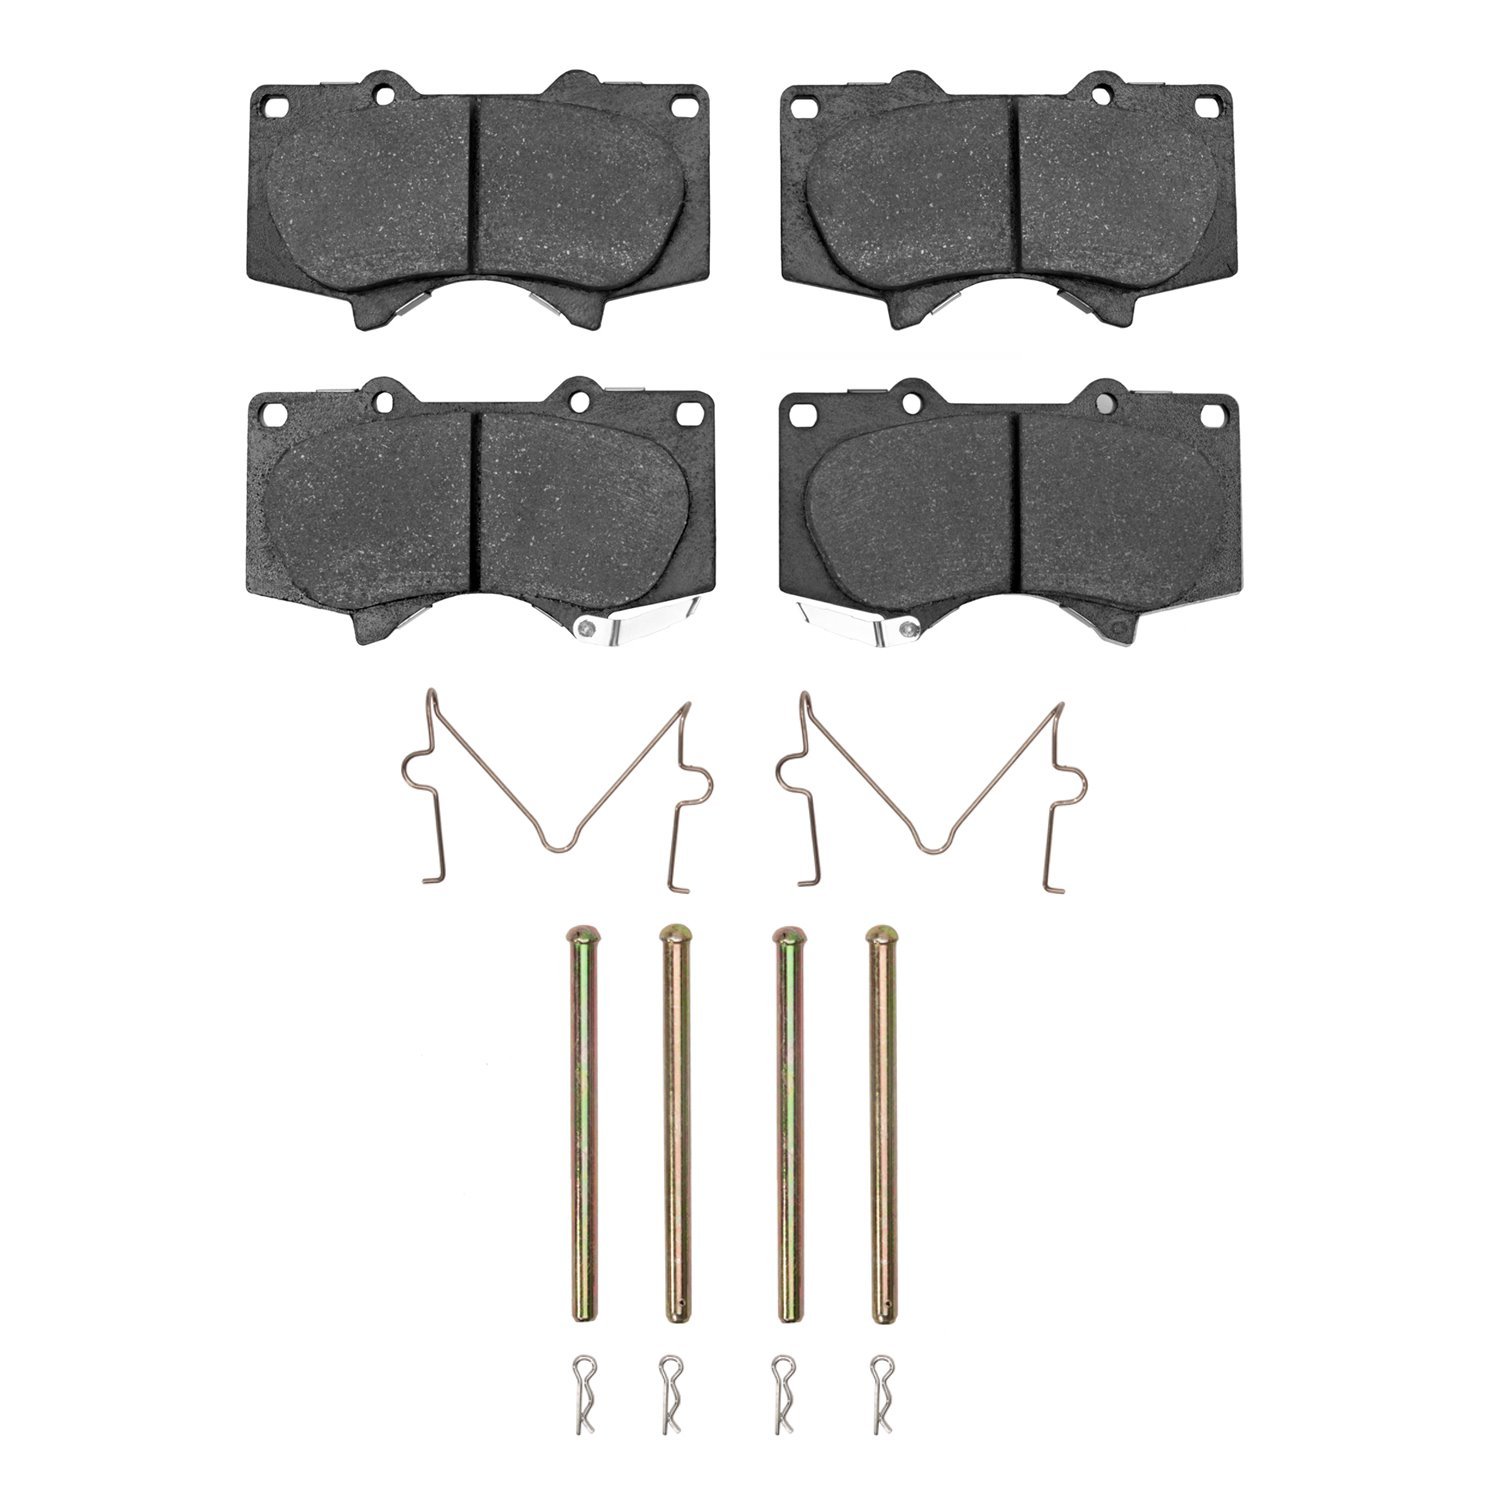 1400-0976-01 Ultimate-Duty Brake Pads & Hardware Kit, Fits Select Multiple Makes/Models, Position: Front